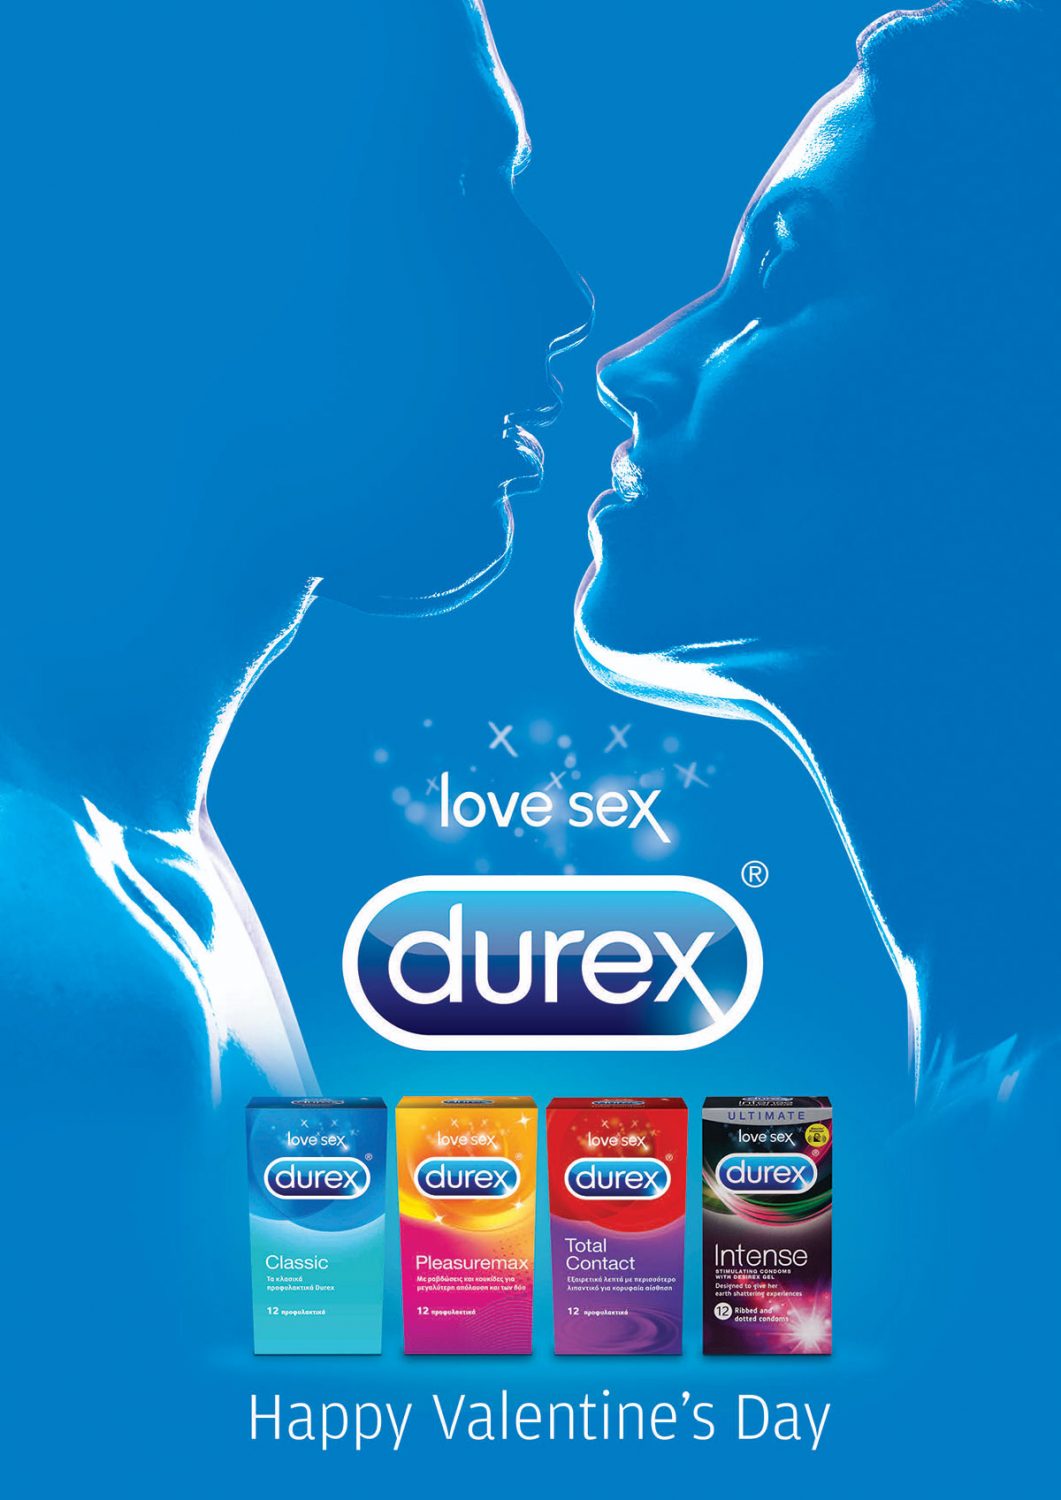 Durex Share The Love 2019 Asterias Creative Design